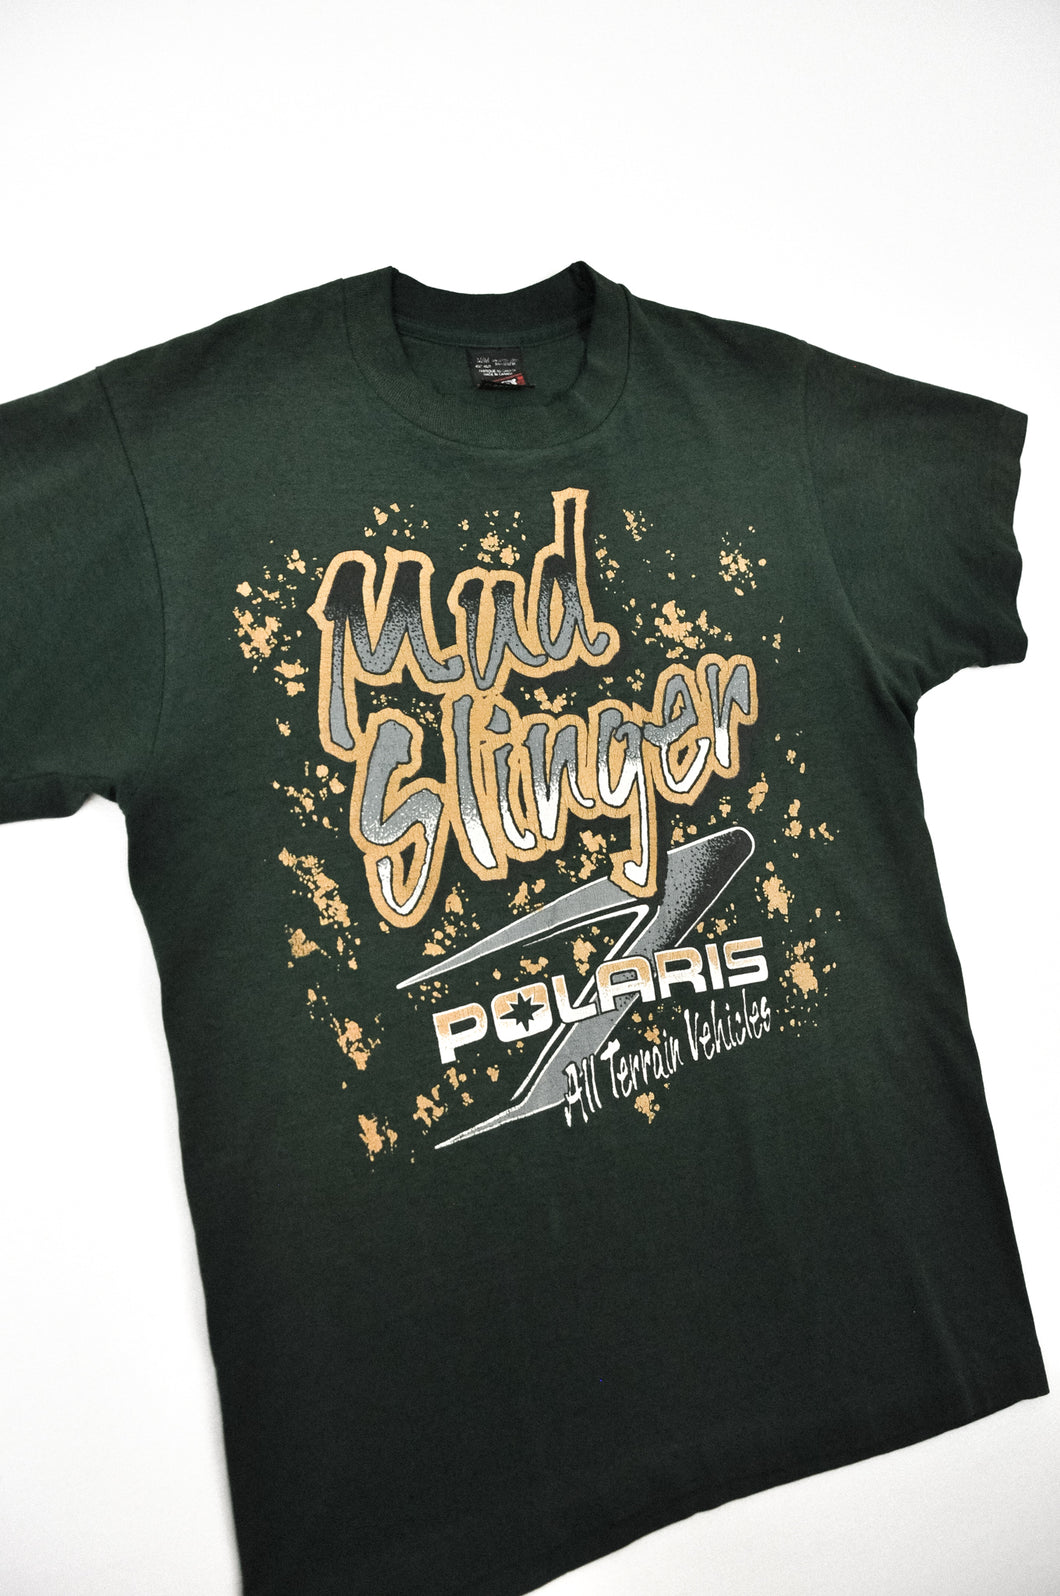 Vintage Polaris Mud Slinger Tshirt | Size Medium